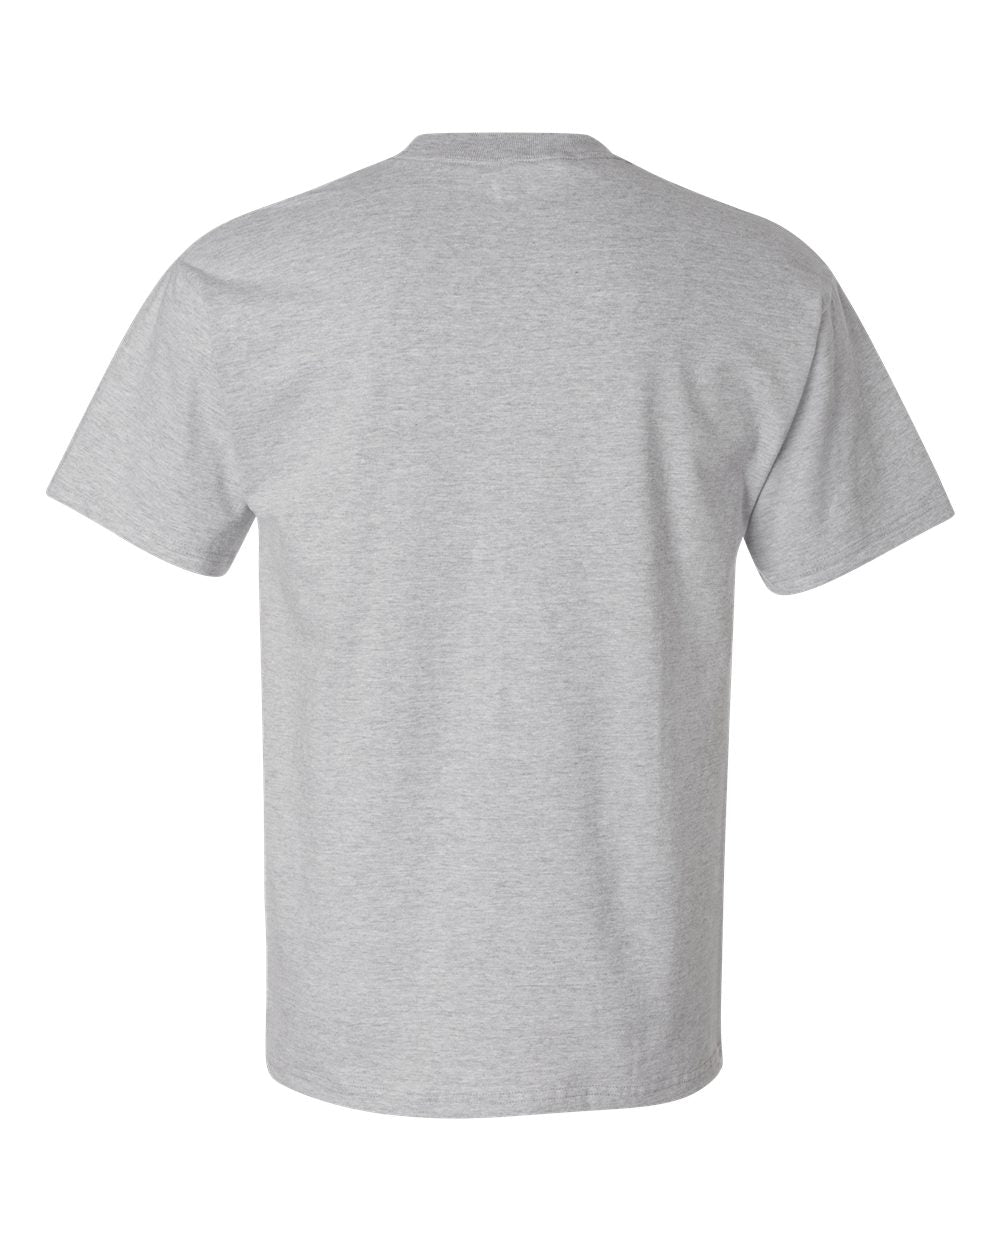 Hanes - Beefy-T® Tall T-Shirt - 518T SKU#0660